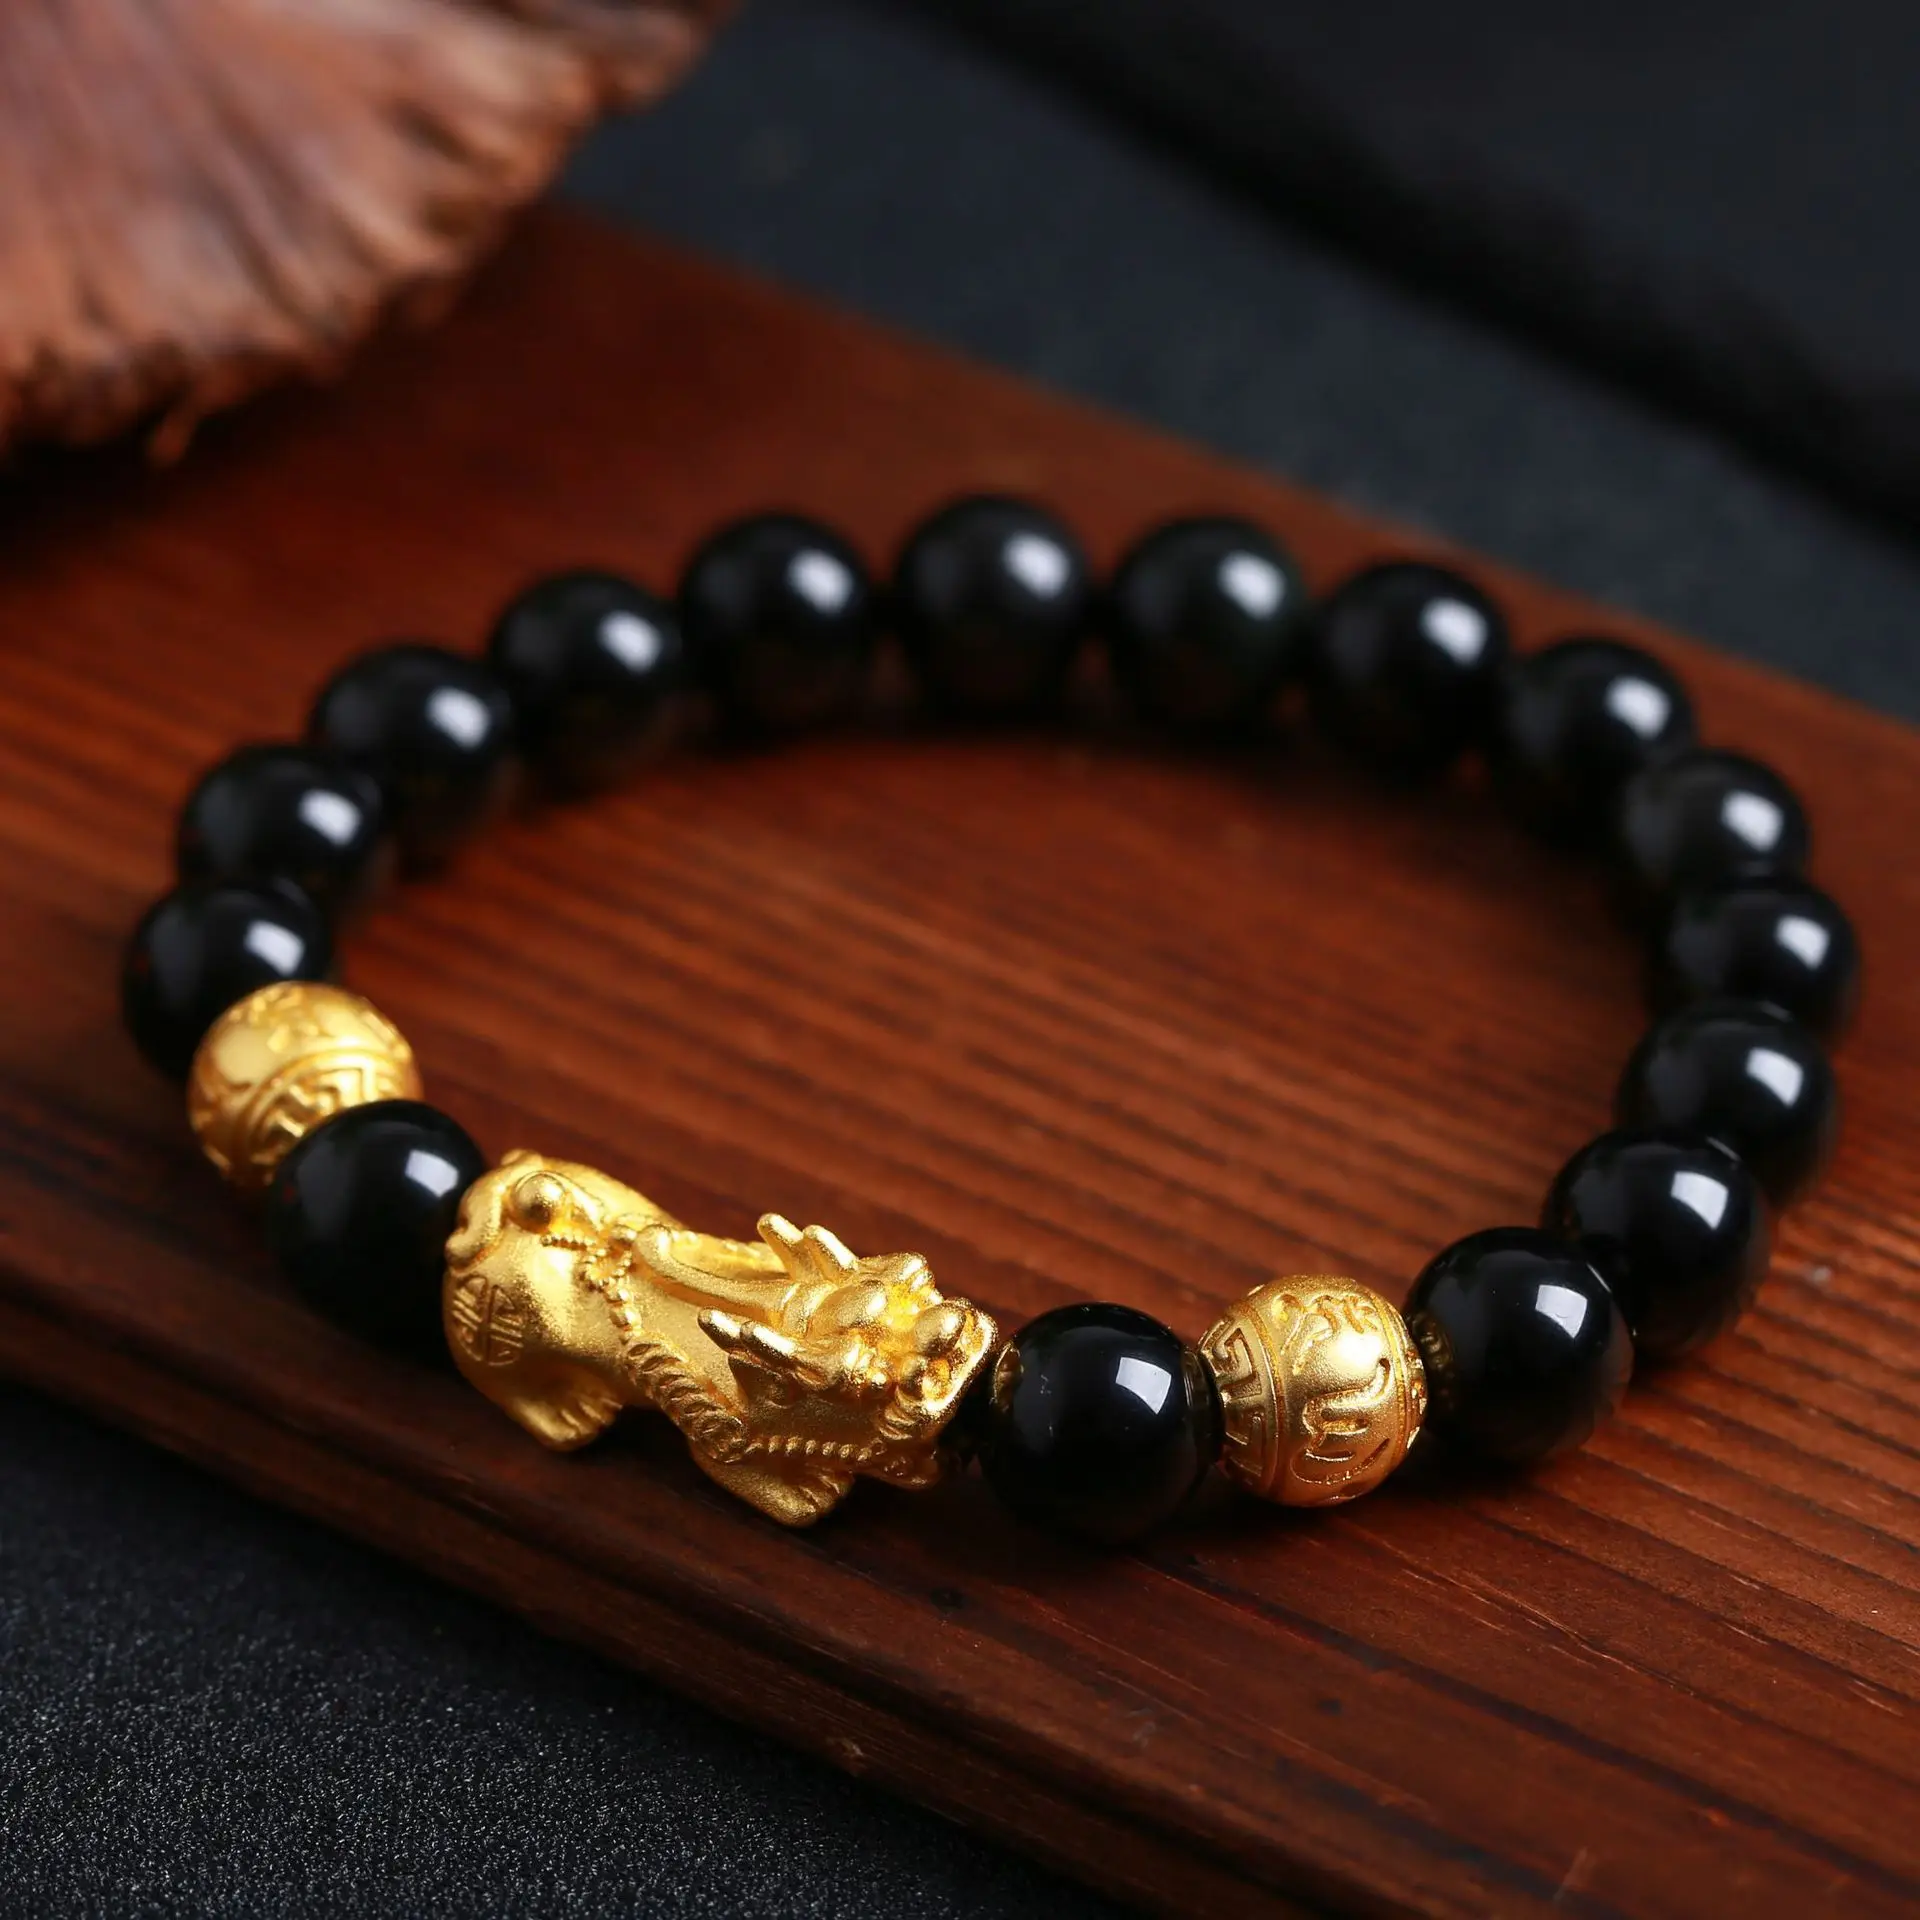 

healing reiki jewelry obsidian quartz Bracelet Produced by the manufacturer